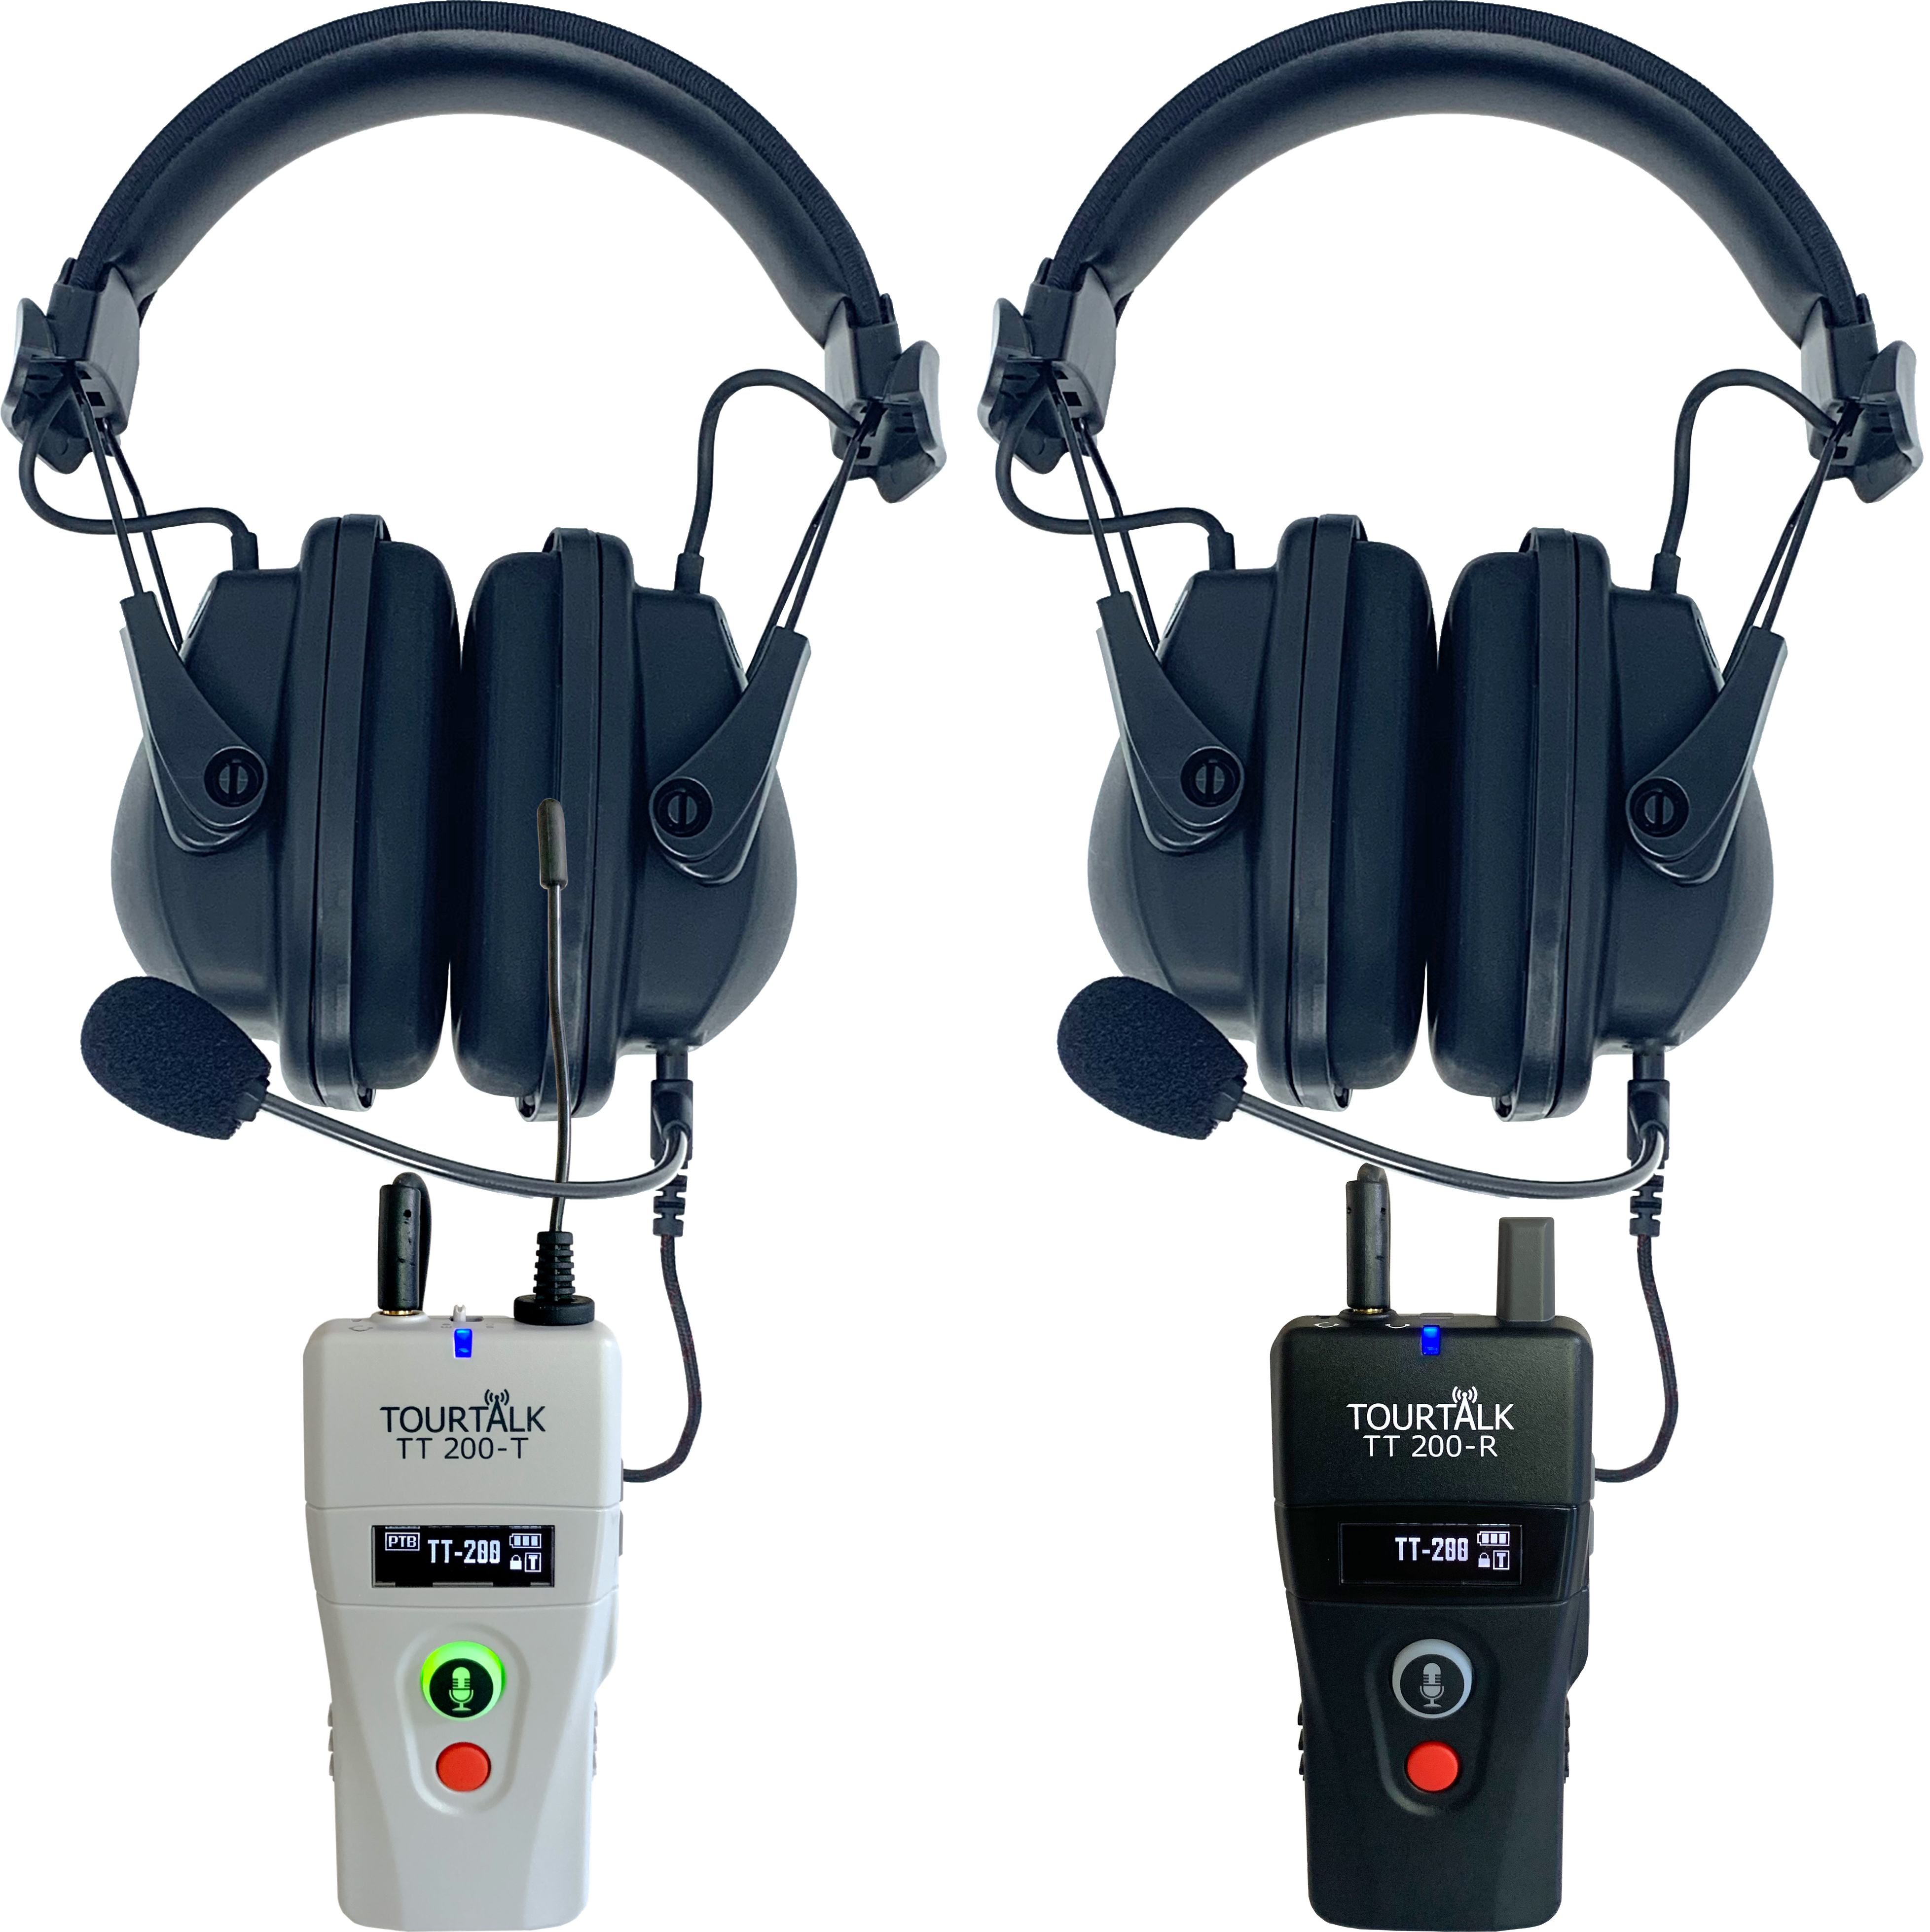 Tourtalk TT 200-T transmitter and TT 200-R receiver with TT-NPH headsets